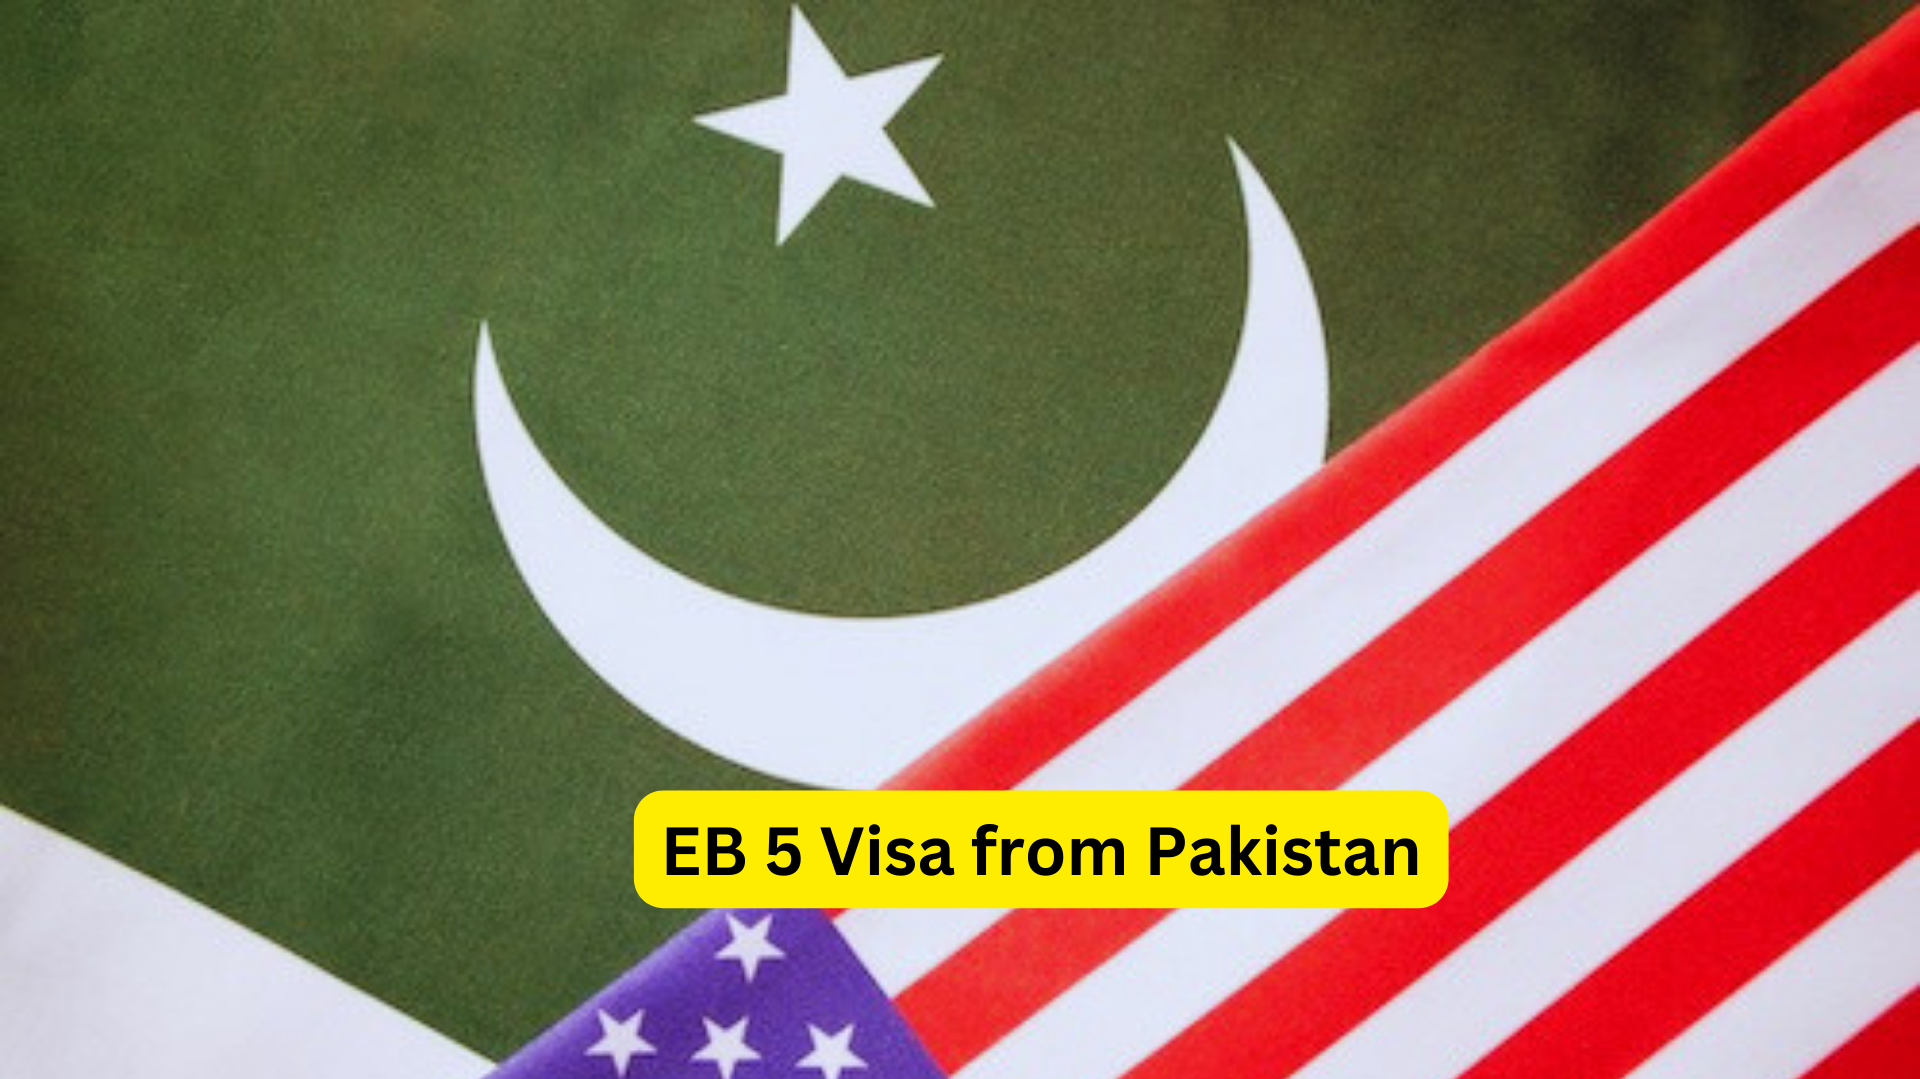 EB 5 Visa from Pakistan